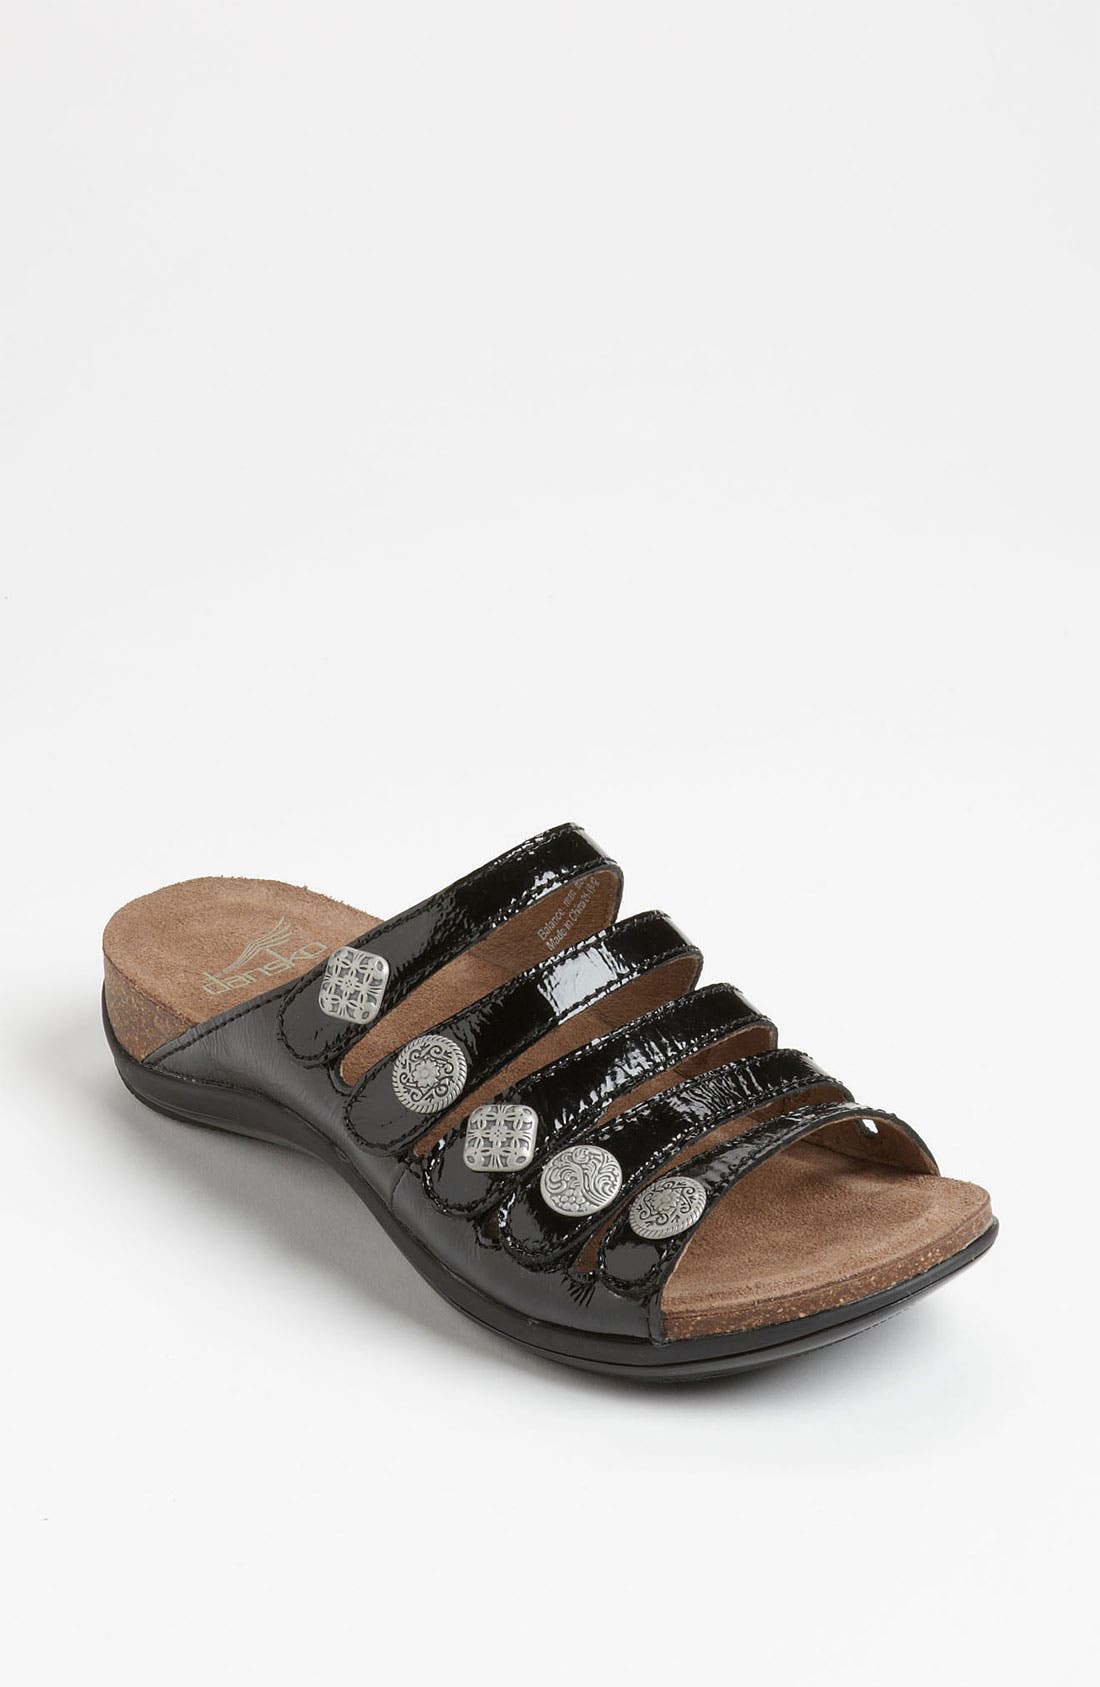 dansko janie sandals